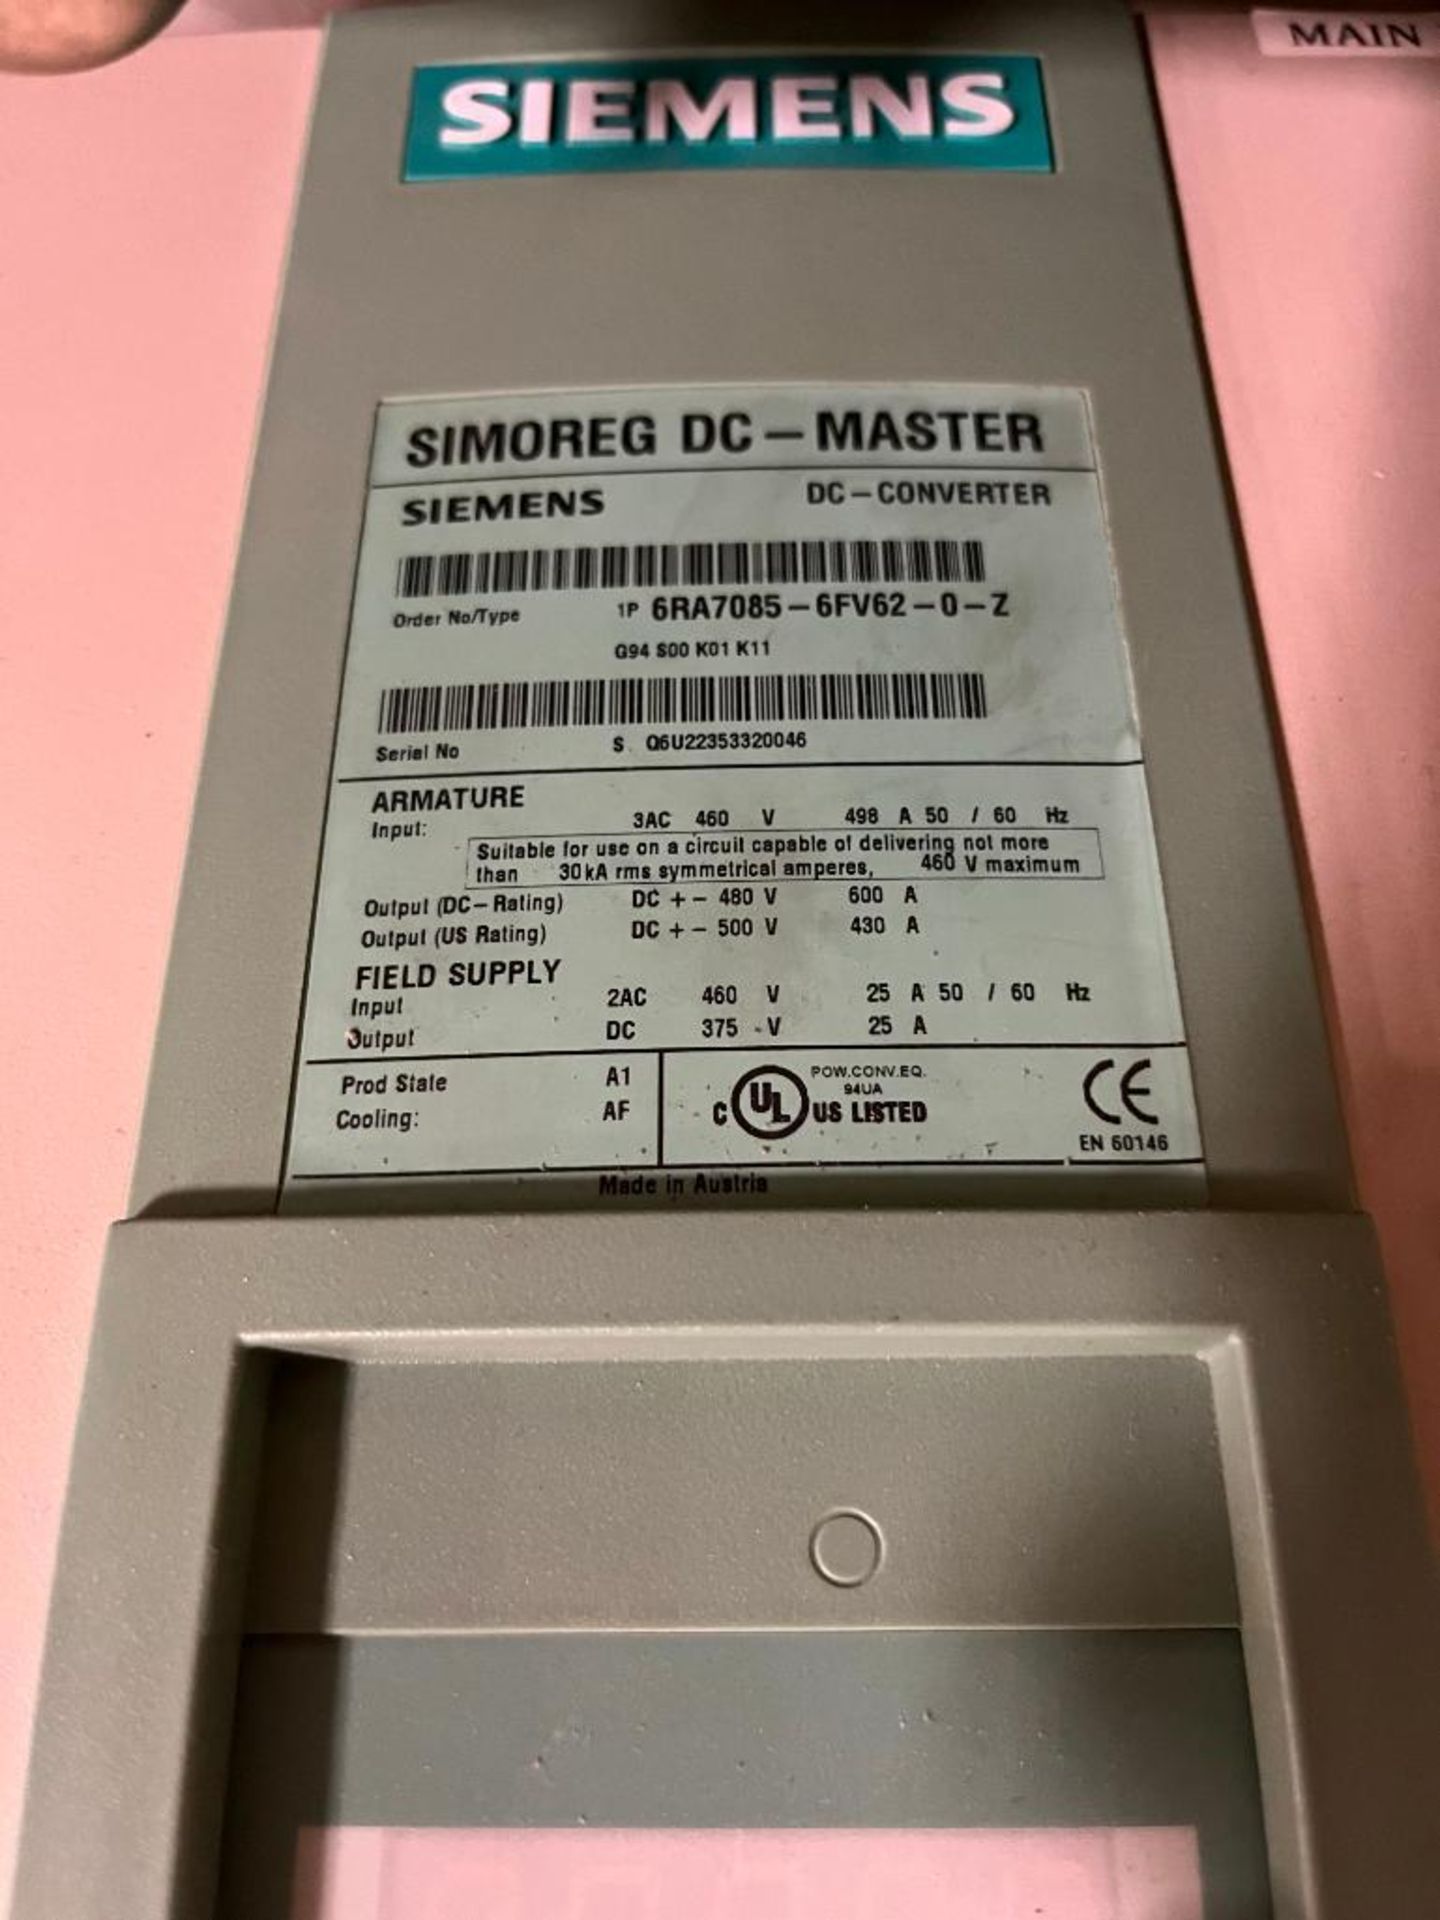 (2x) Siemens DC Converter, Simoreg DC Master - Image 6 of 6